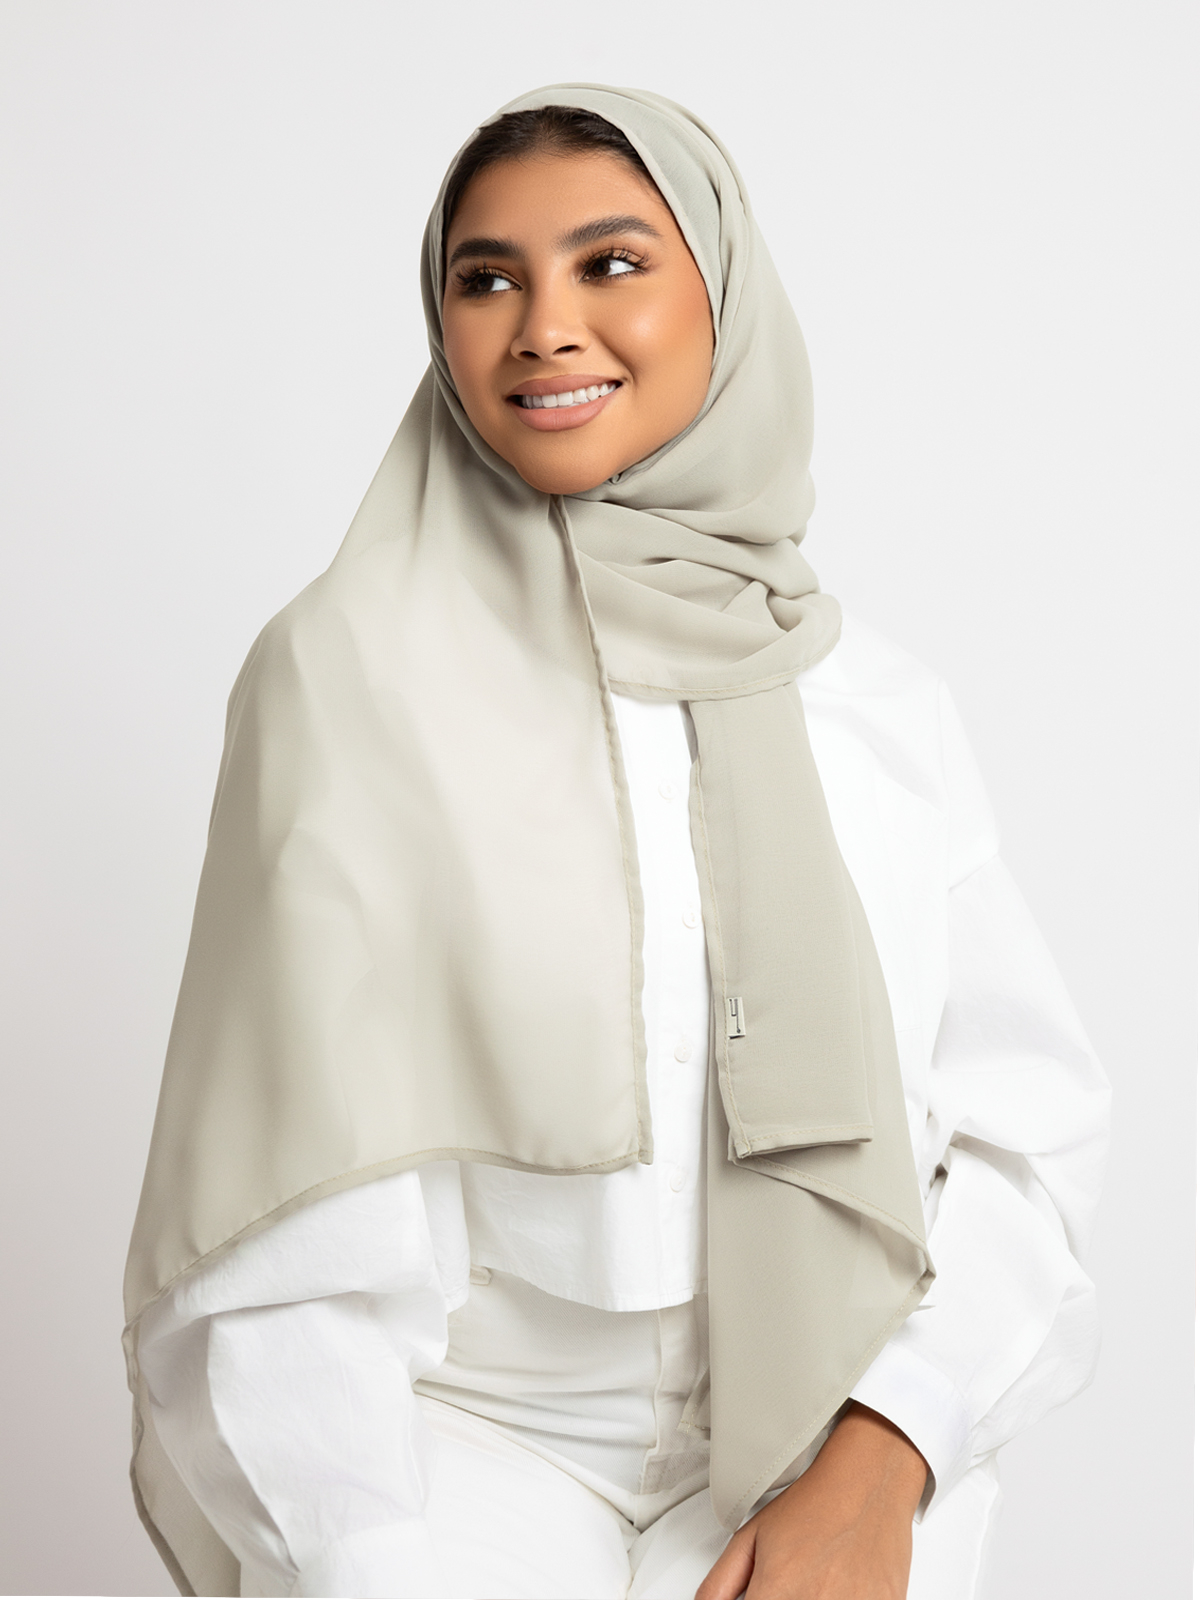 Luxurious chiffon hijab plain tarha 200 cm long pistachio color high quality material online in ksa by kaafmeem